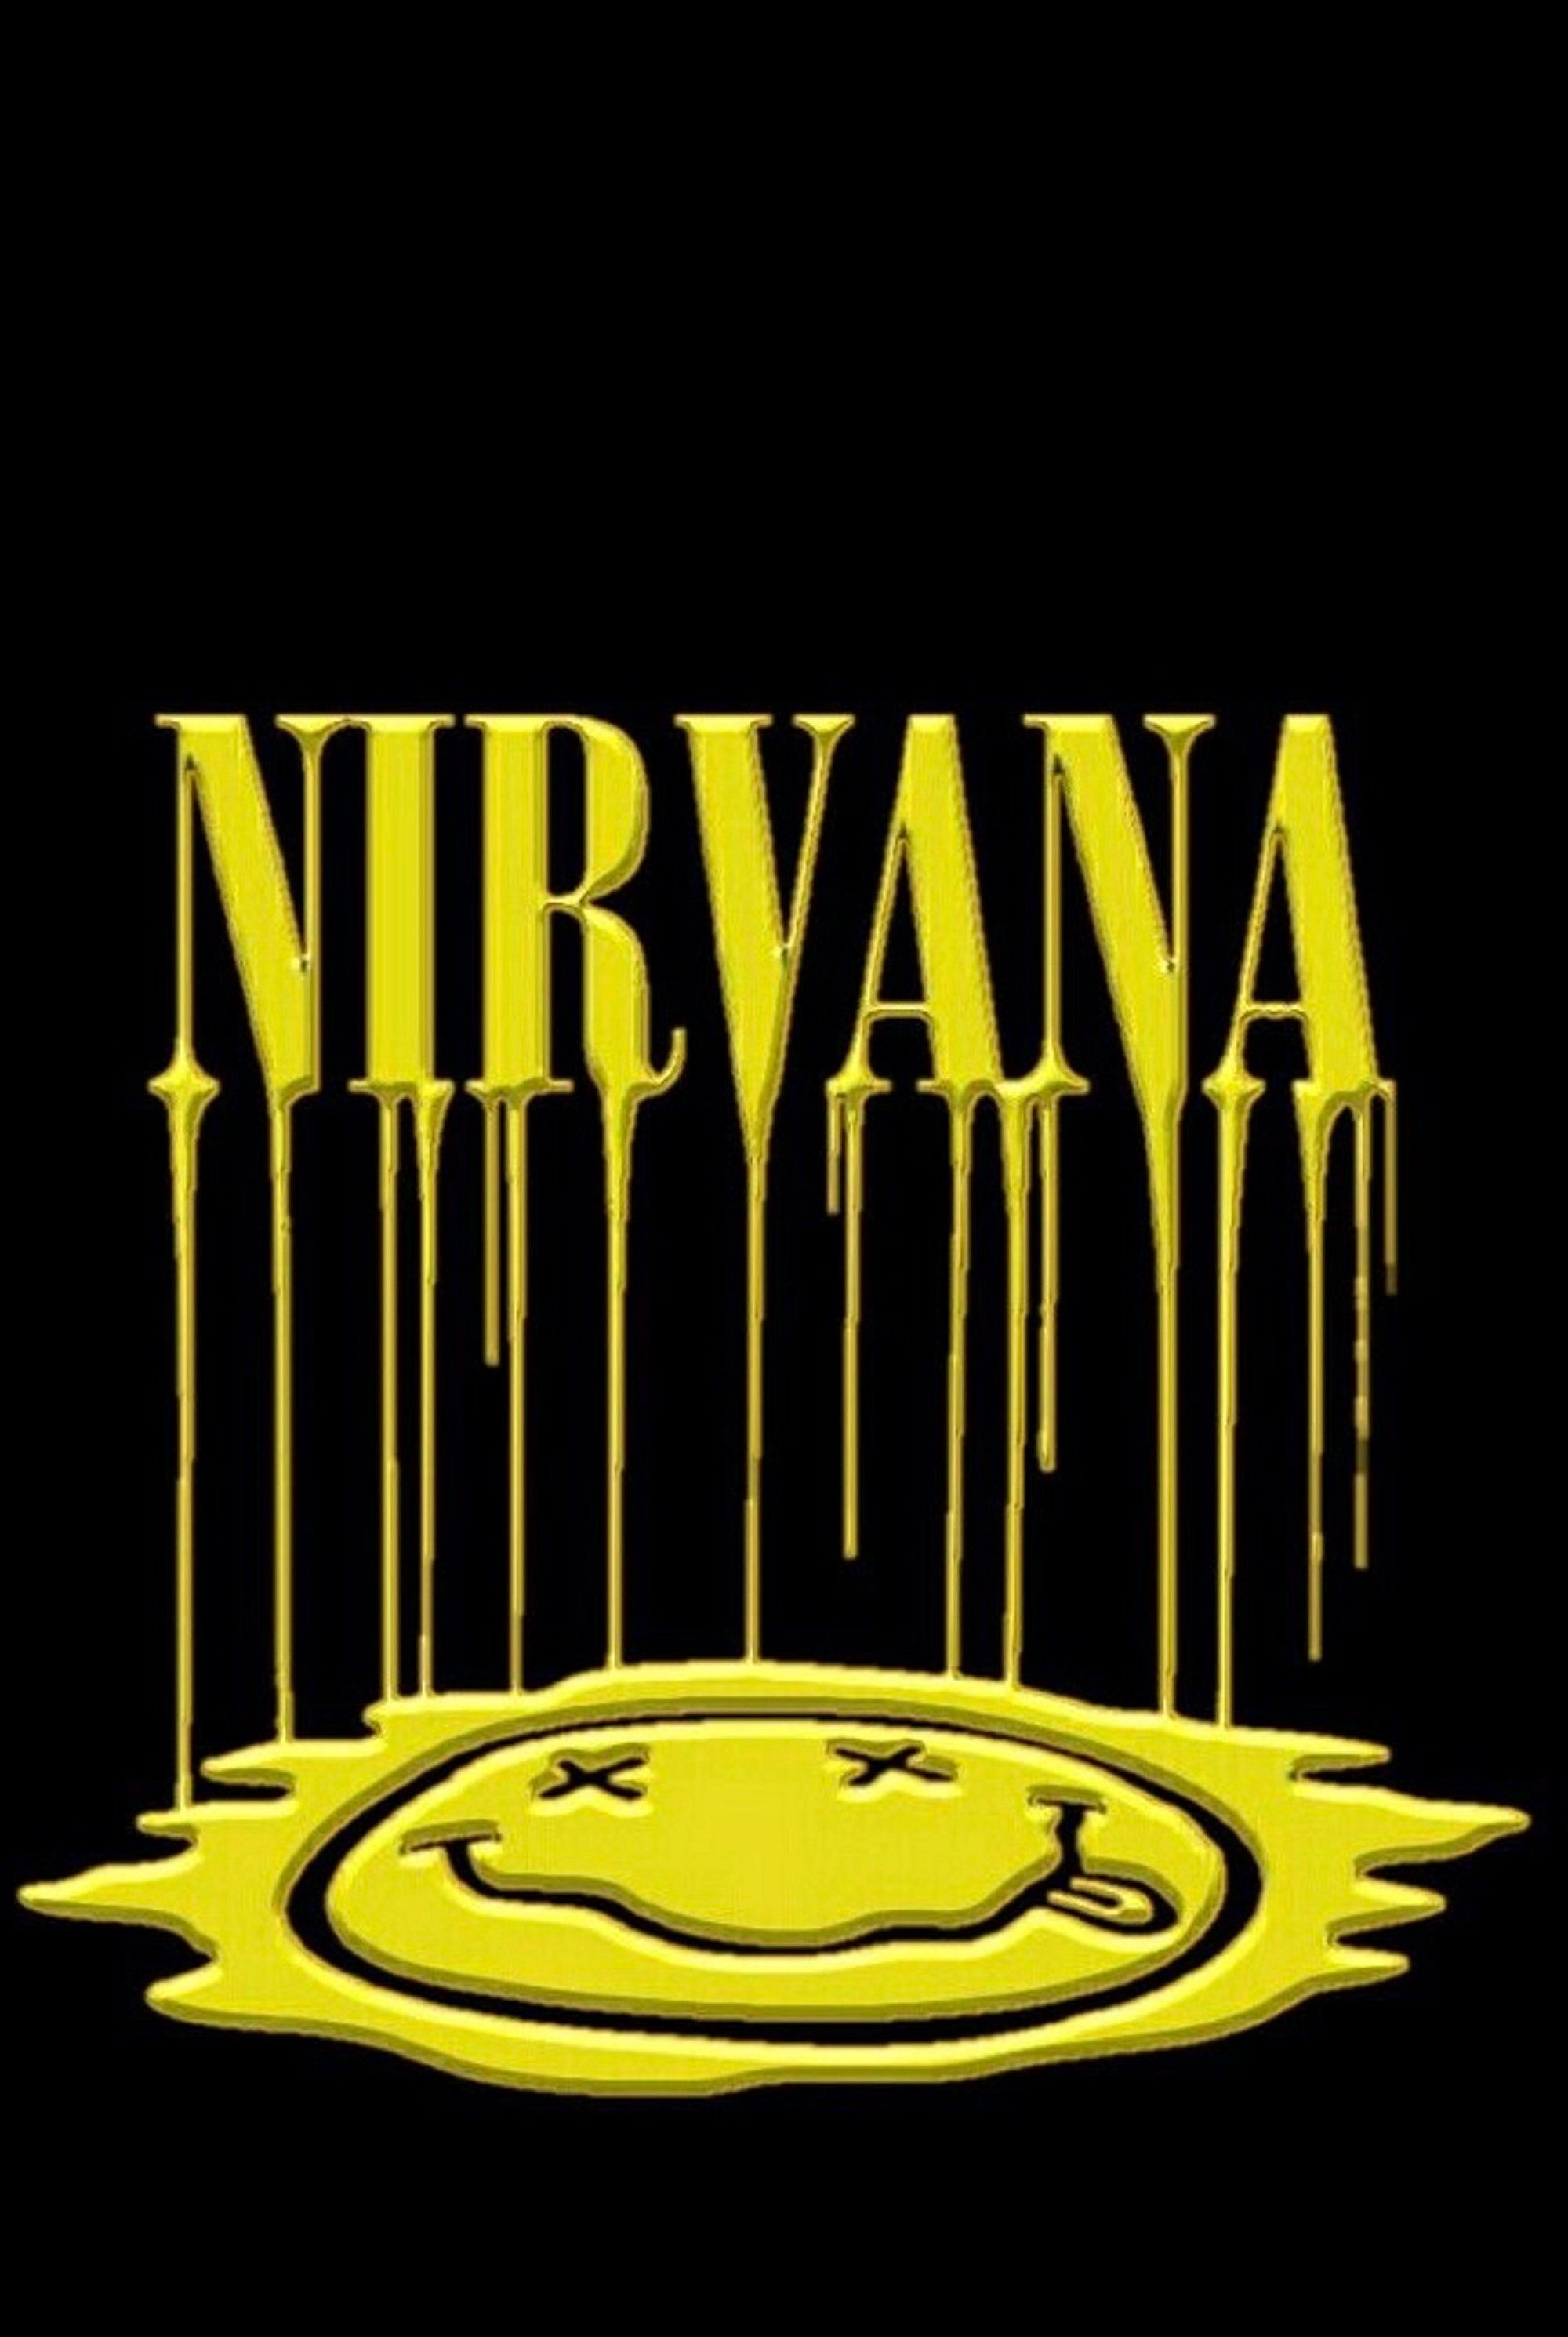 Nirvana Poster Nirvana Grunge Poster Grunge Room Decor